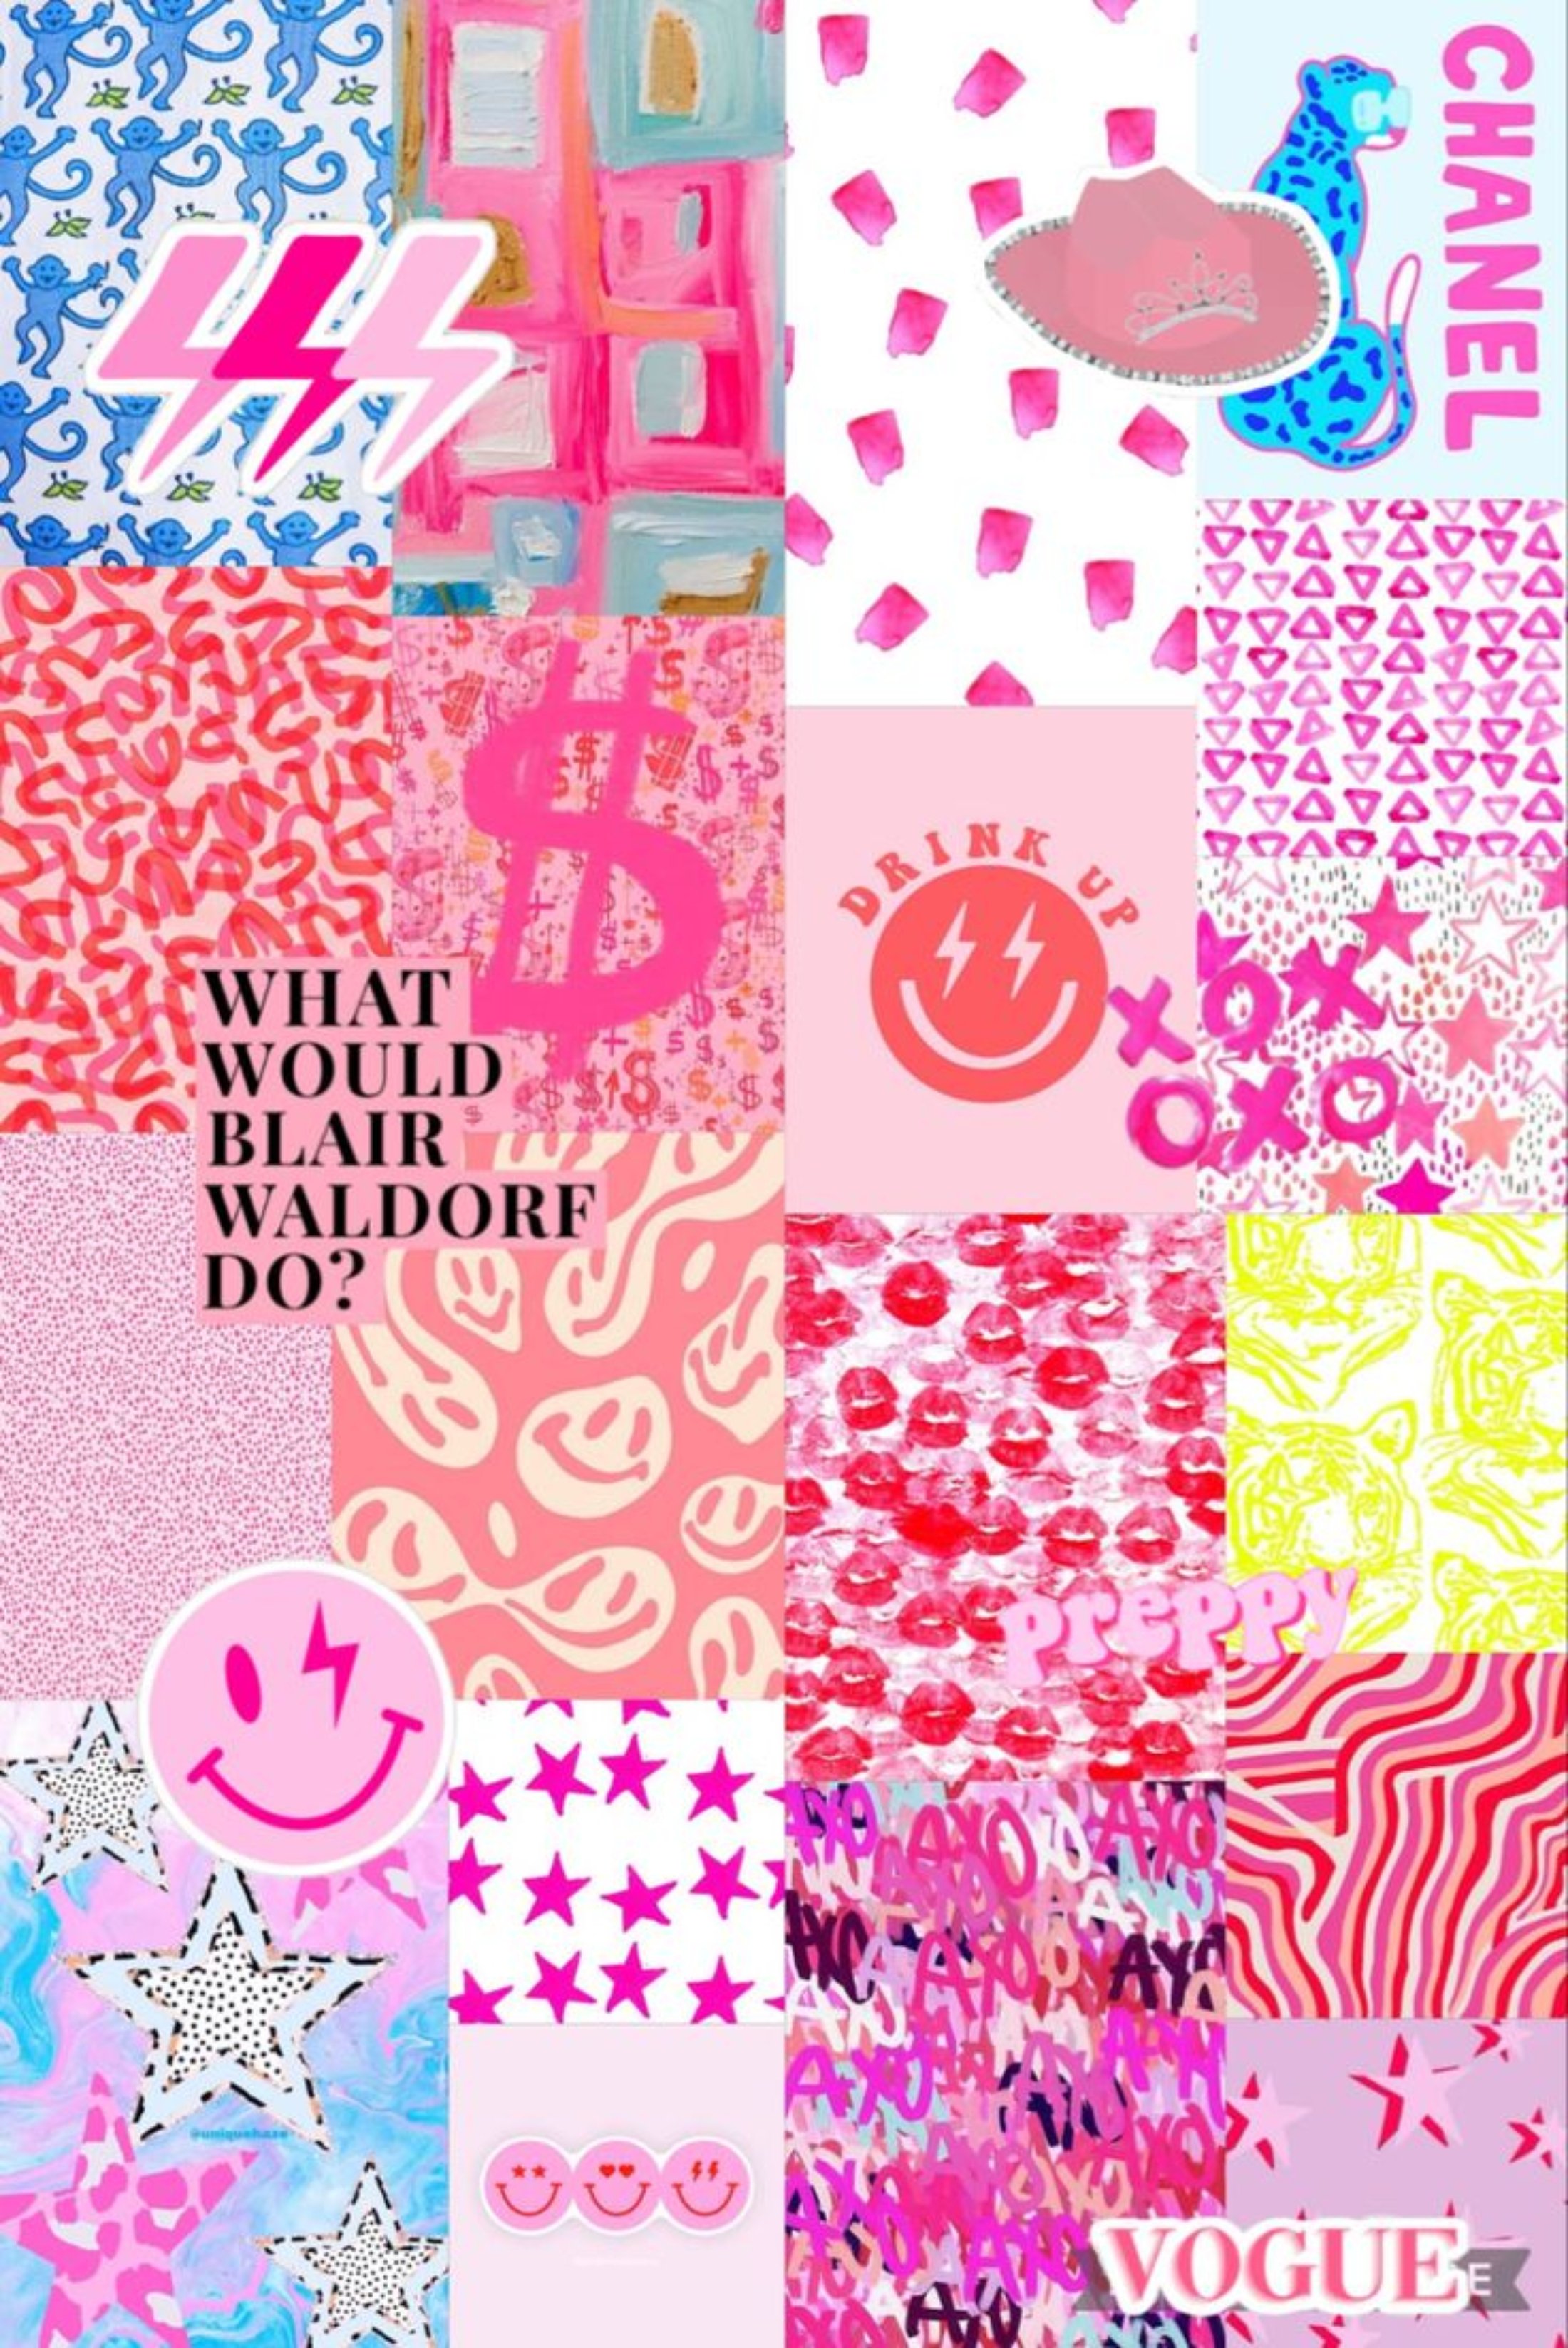 Preppy Pink Wallpaper In A Single Image